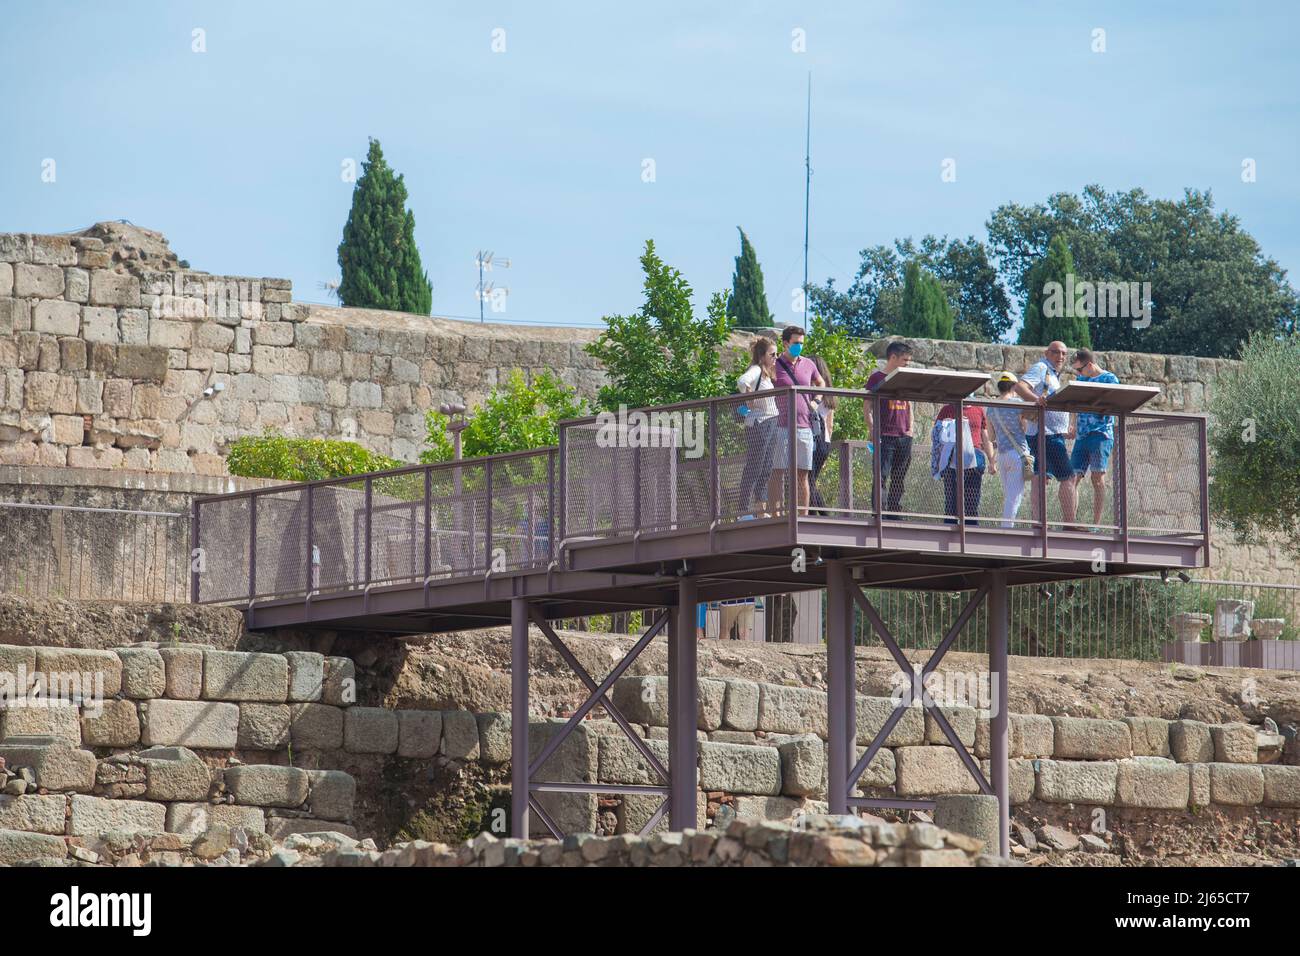 Merida, Spain - Oct 9th, 2021: Alcazaba of Merida viewpoint platform full of visitors. Extremadura, Spain Stock Photo